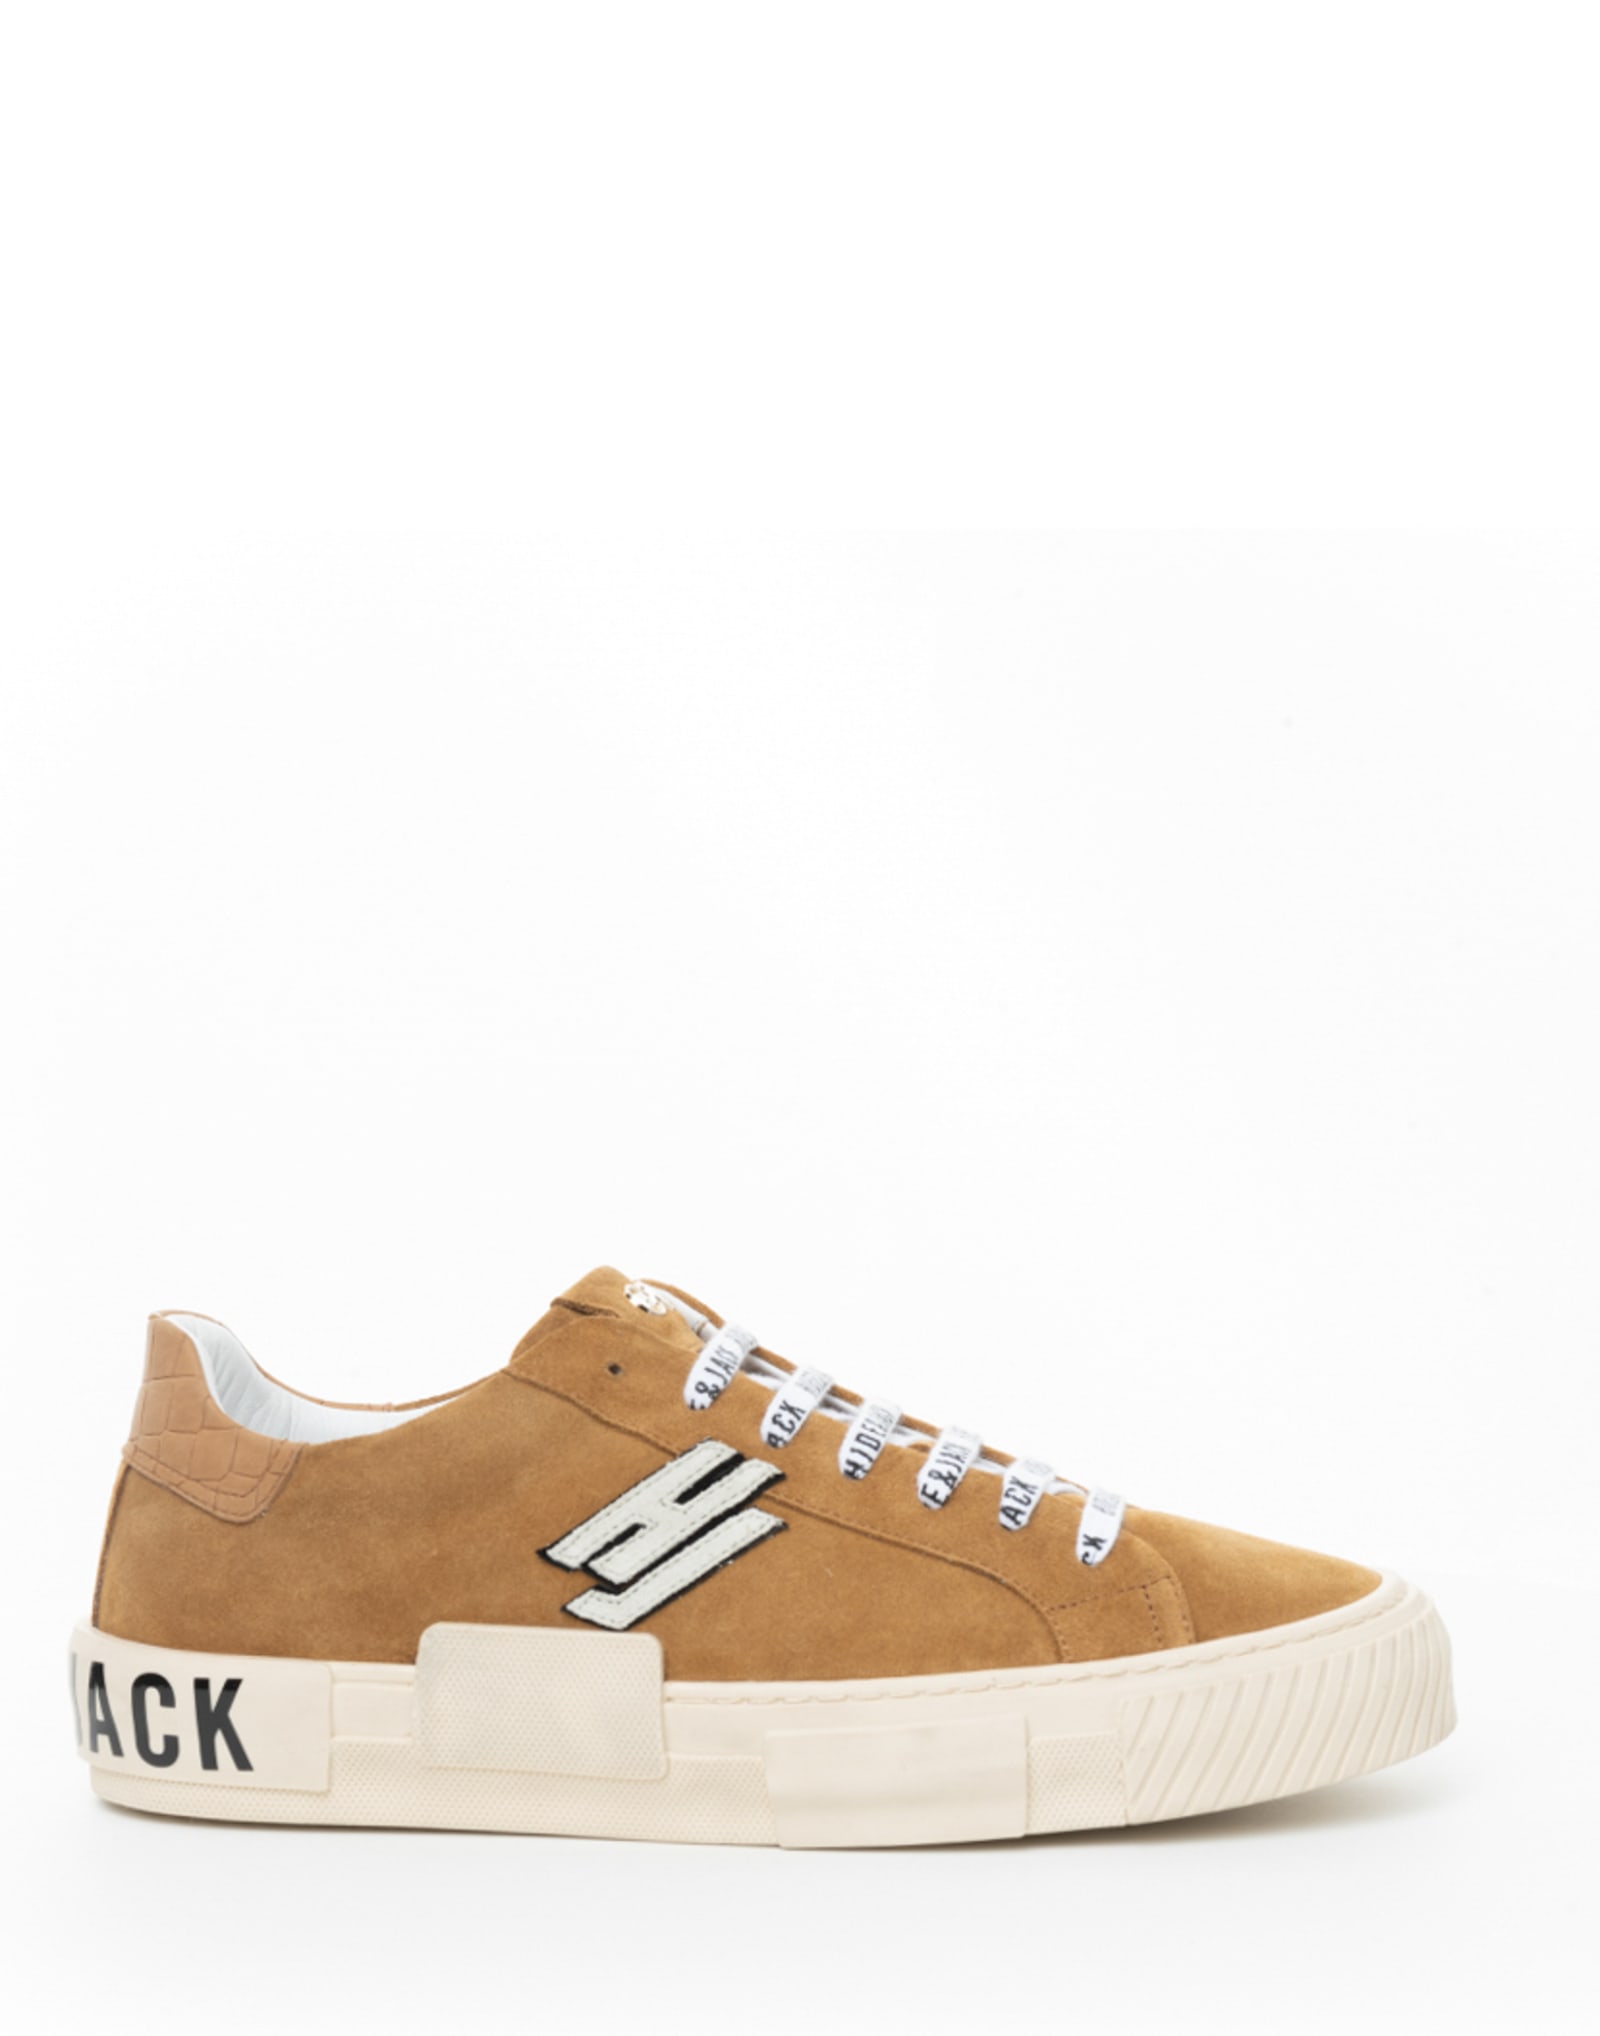 Hide & Jack Low Top Sneaker Essence Vulc